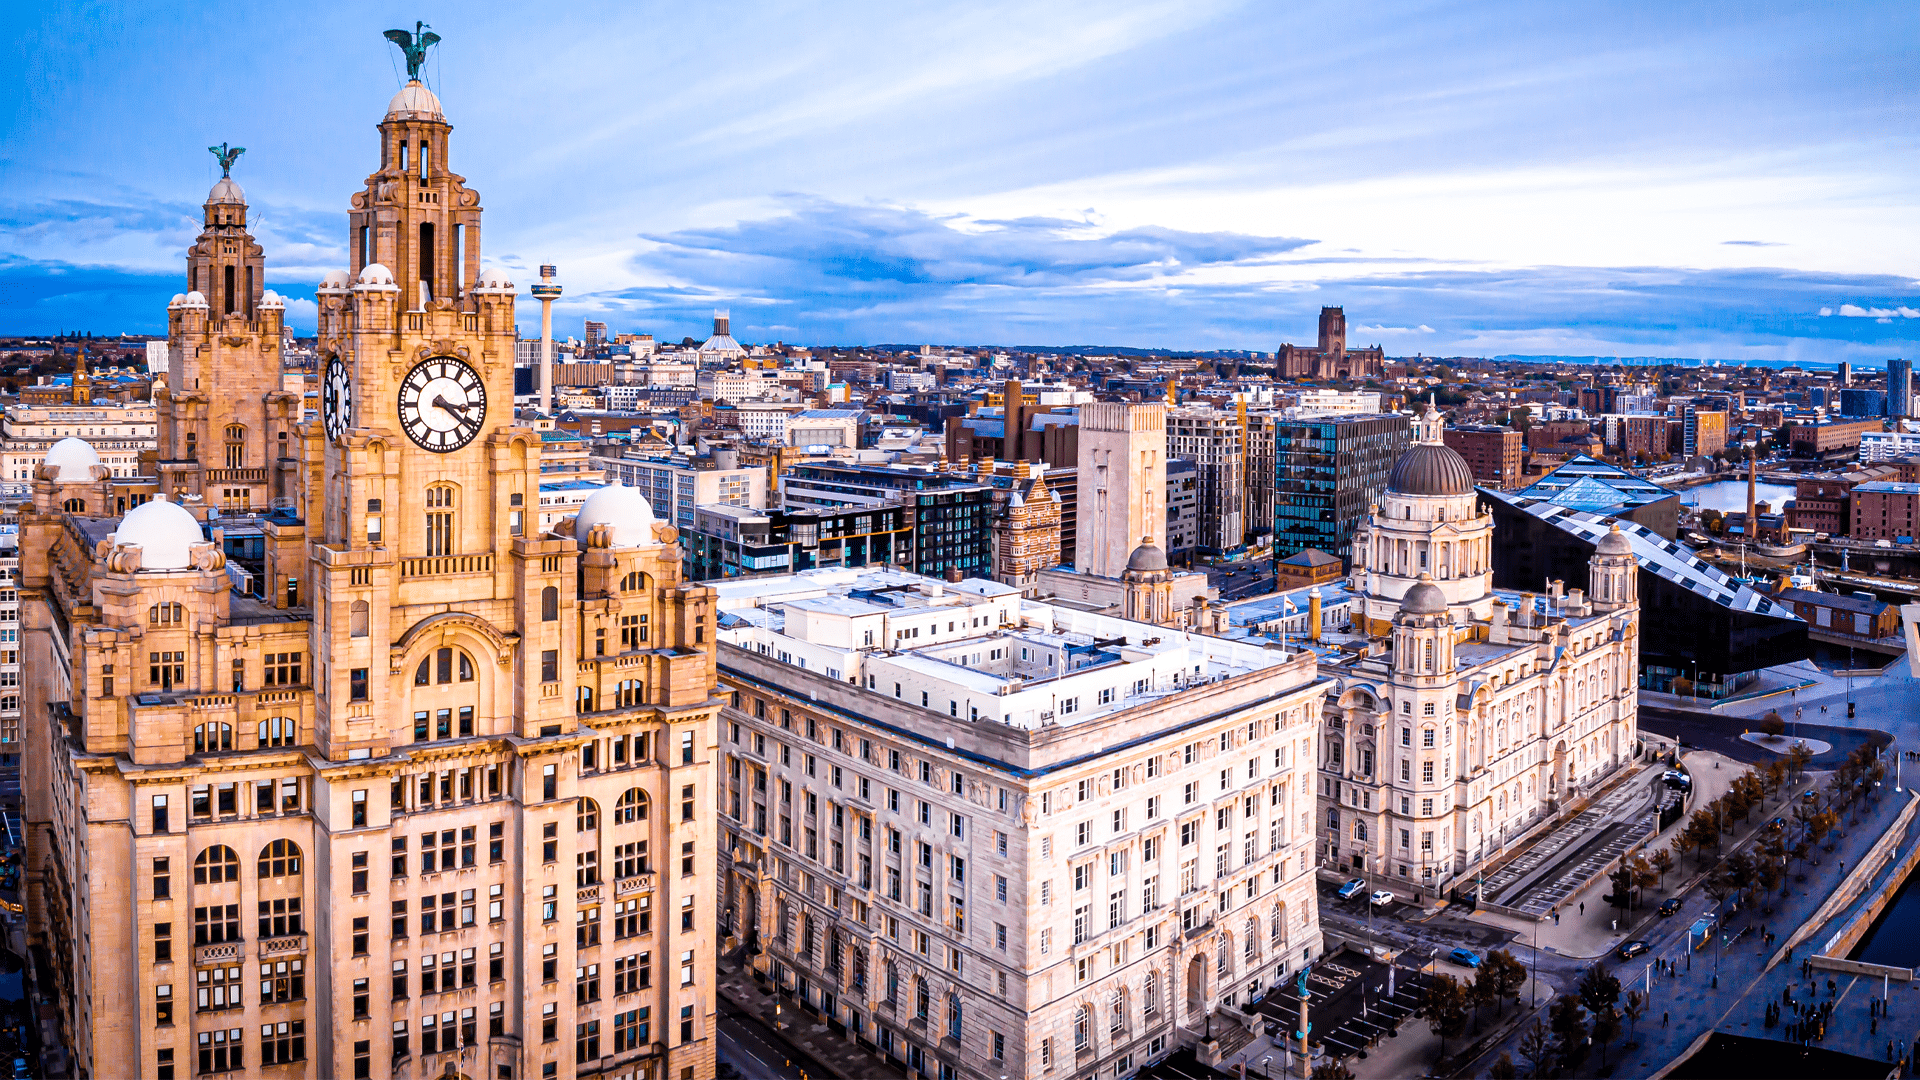 Skyline View of Liverpool